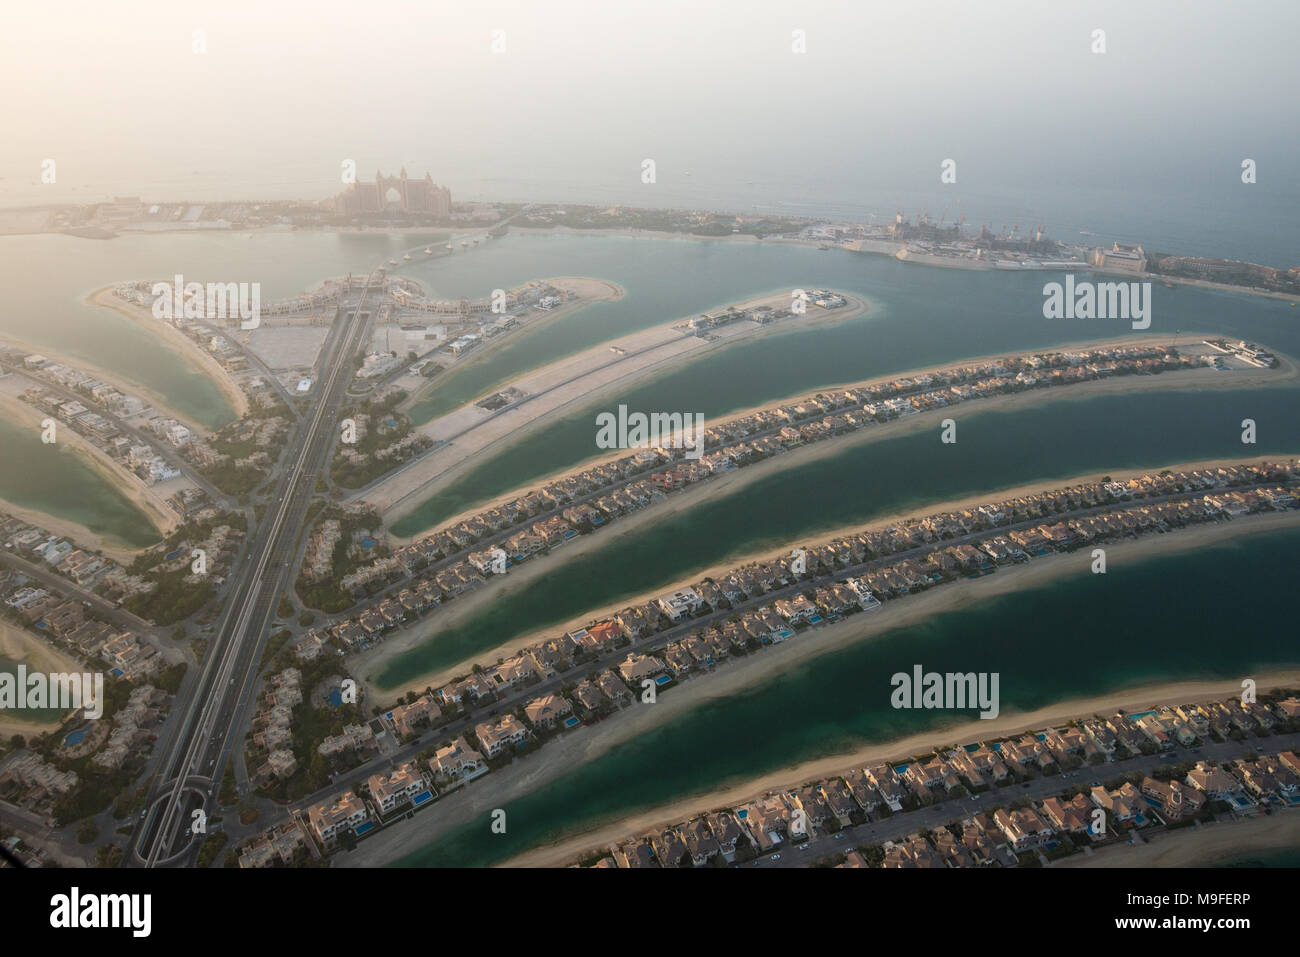 Aerial photo of The Palm Jumeirah in Dubai, UAE at dusk Stock Photo